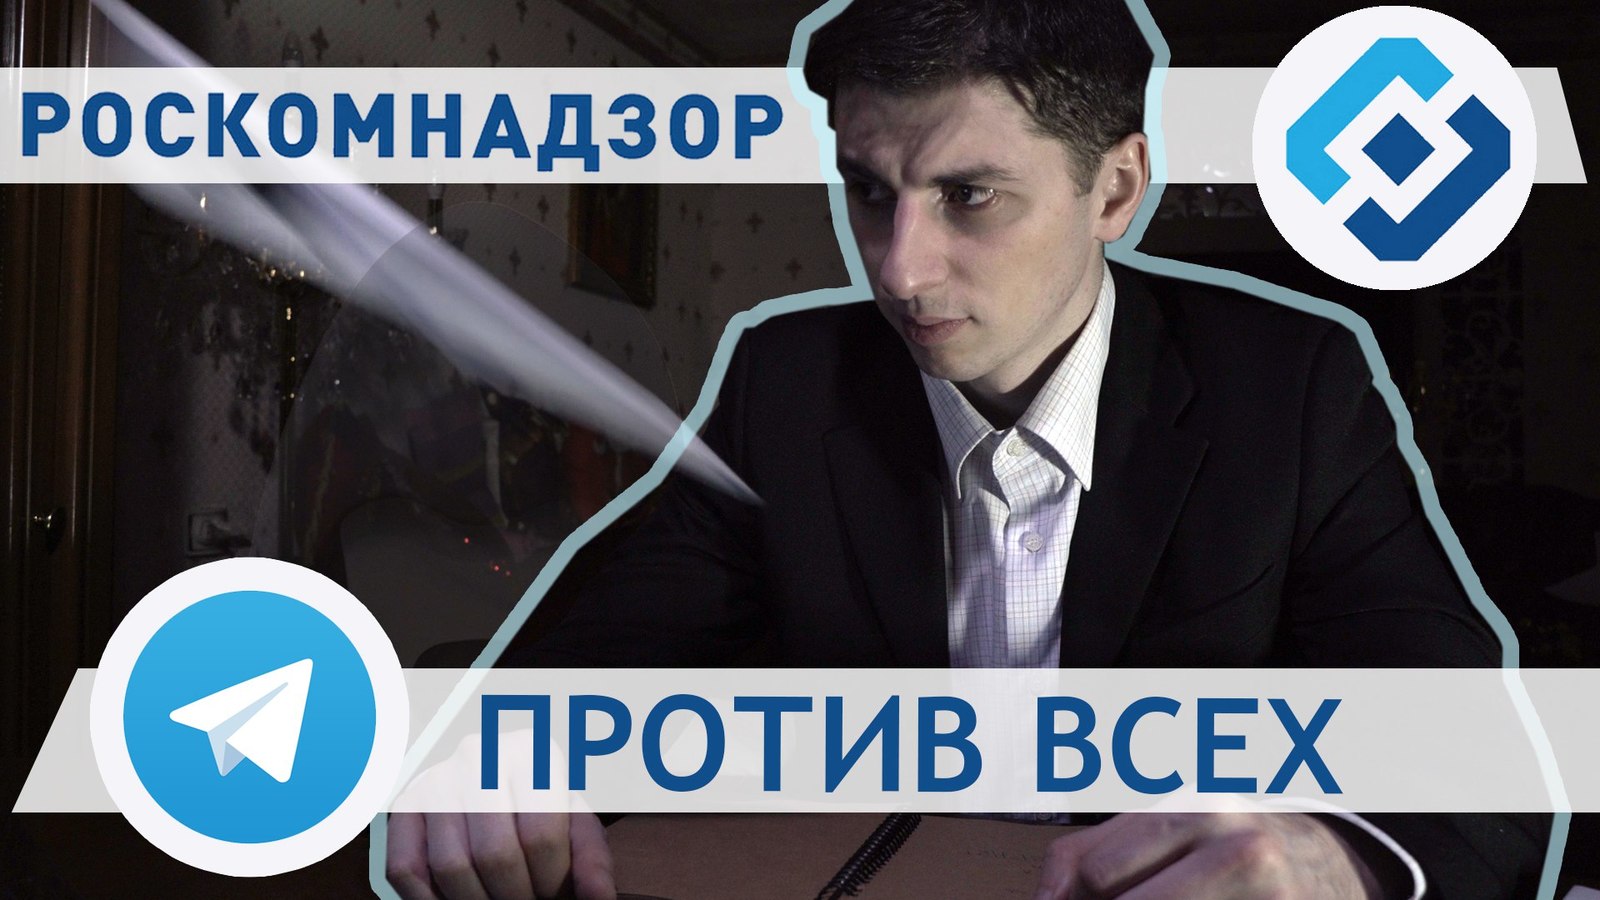 Roskomnadzor against everyone (trailer) - My, Telegrams, Telegram, Telegram blocking, Roskomnadzor, Video, Trailer, Humor, Durov, , Pavel Durov